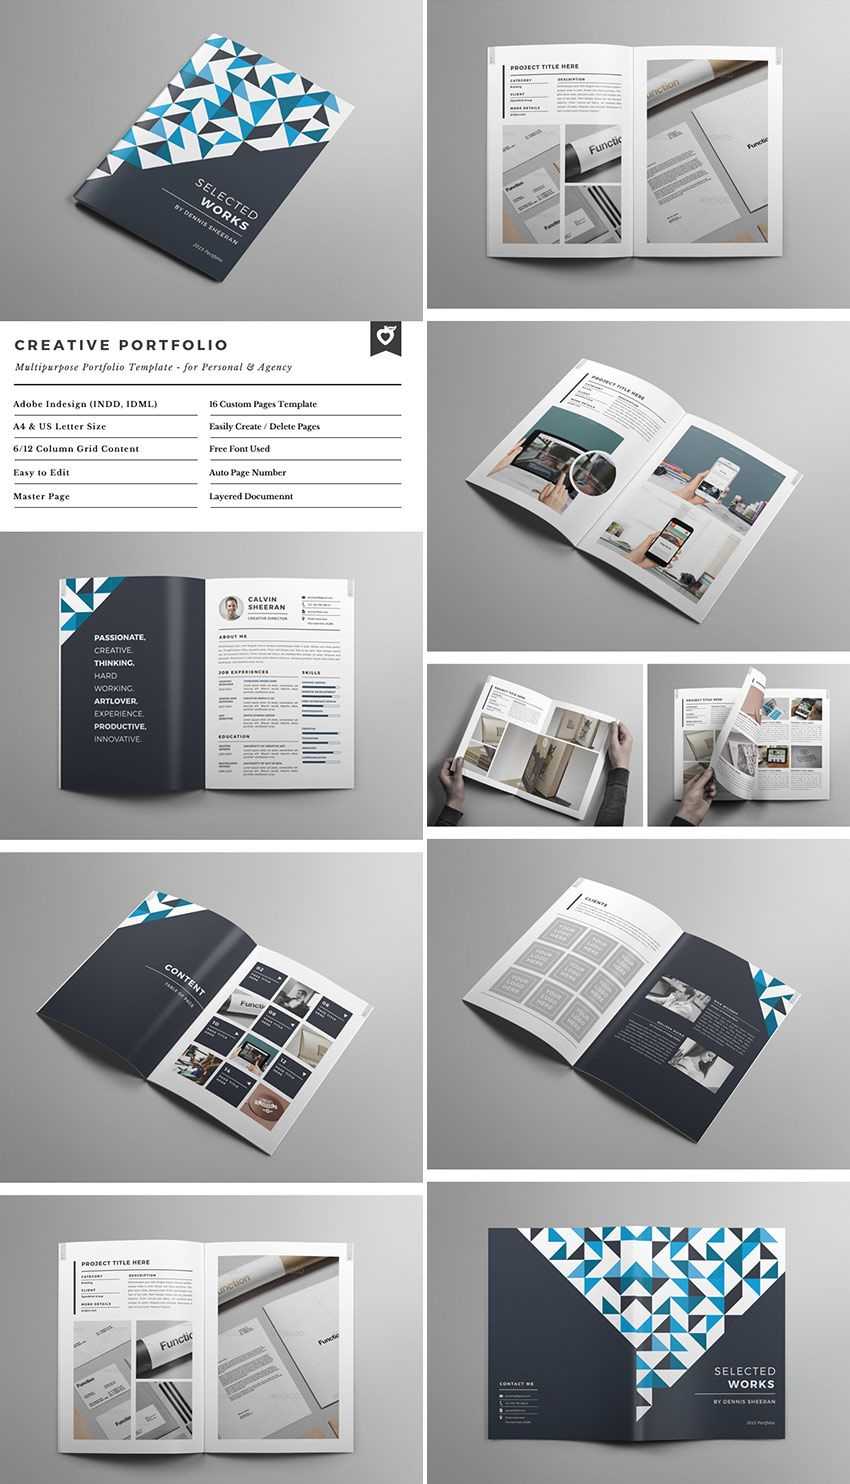 Creative Portfolio Brochure Indd | Resumes And Portfolio Inside Adobe Indesign Brochure Templates